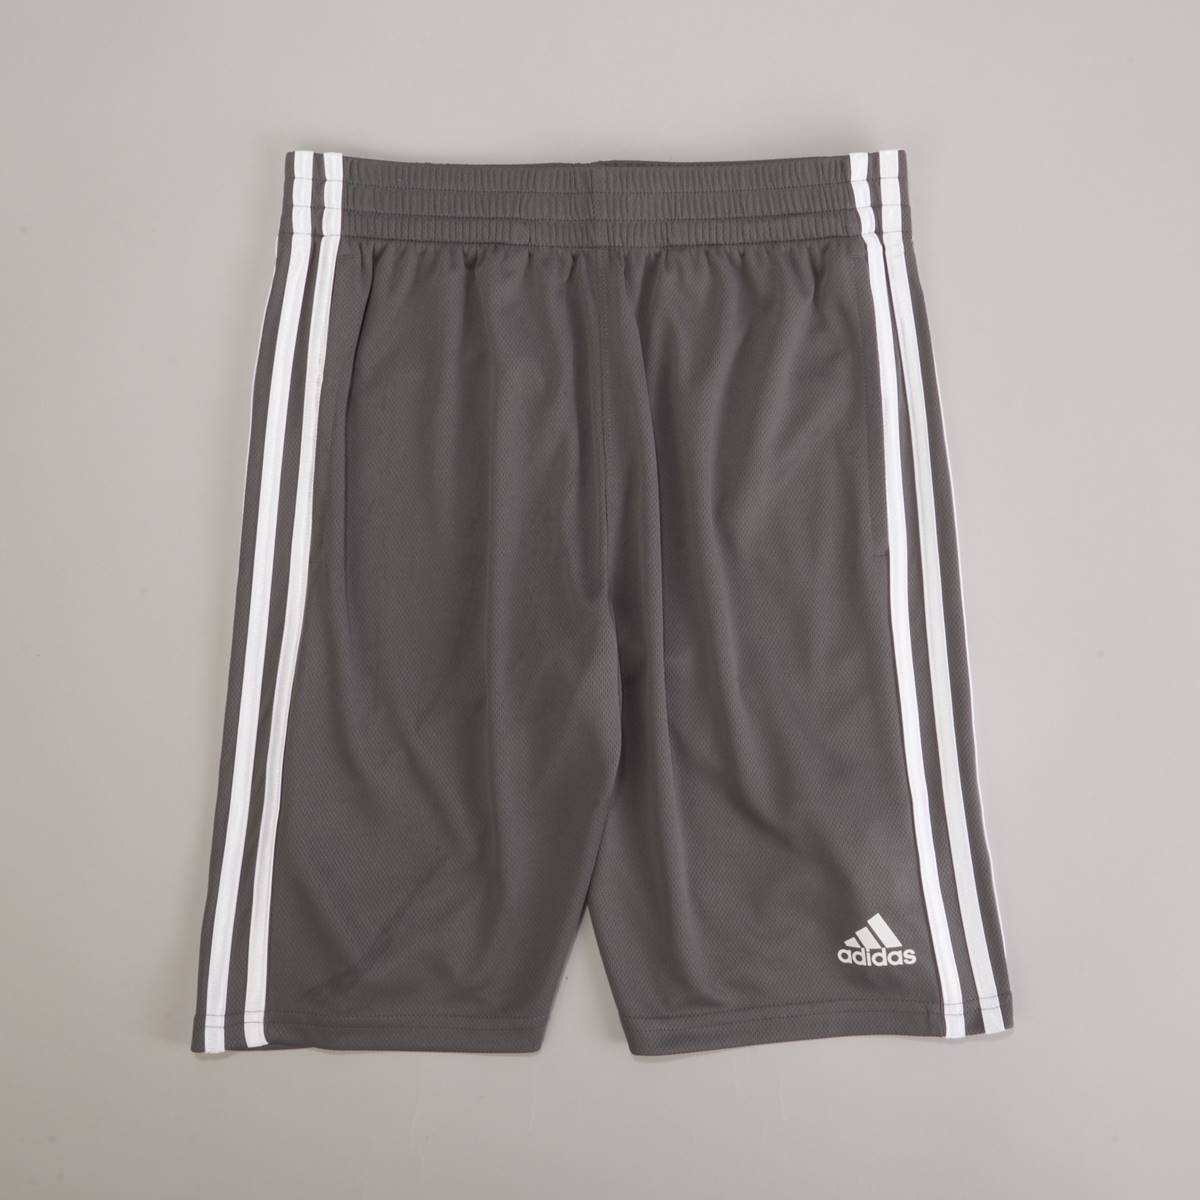 Boys (8-20) Adidas(R) Classic 3S Shorts